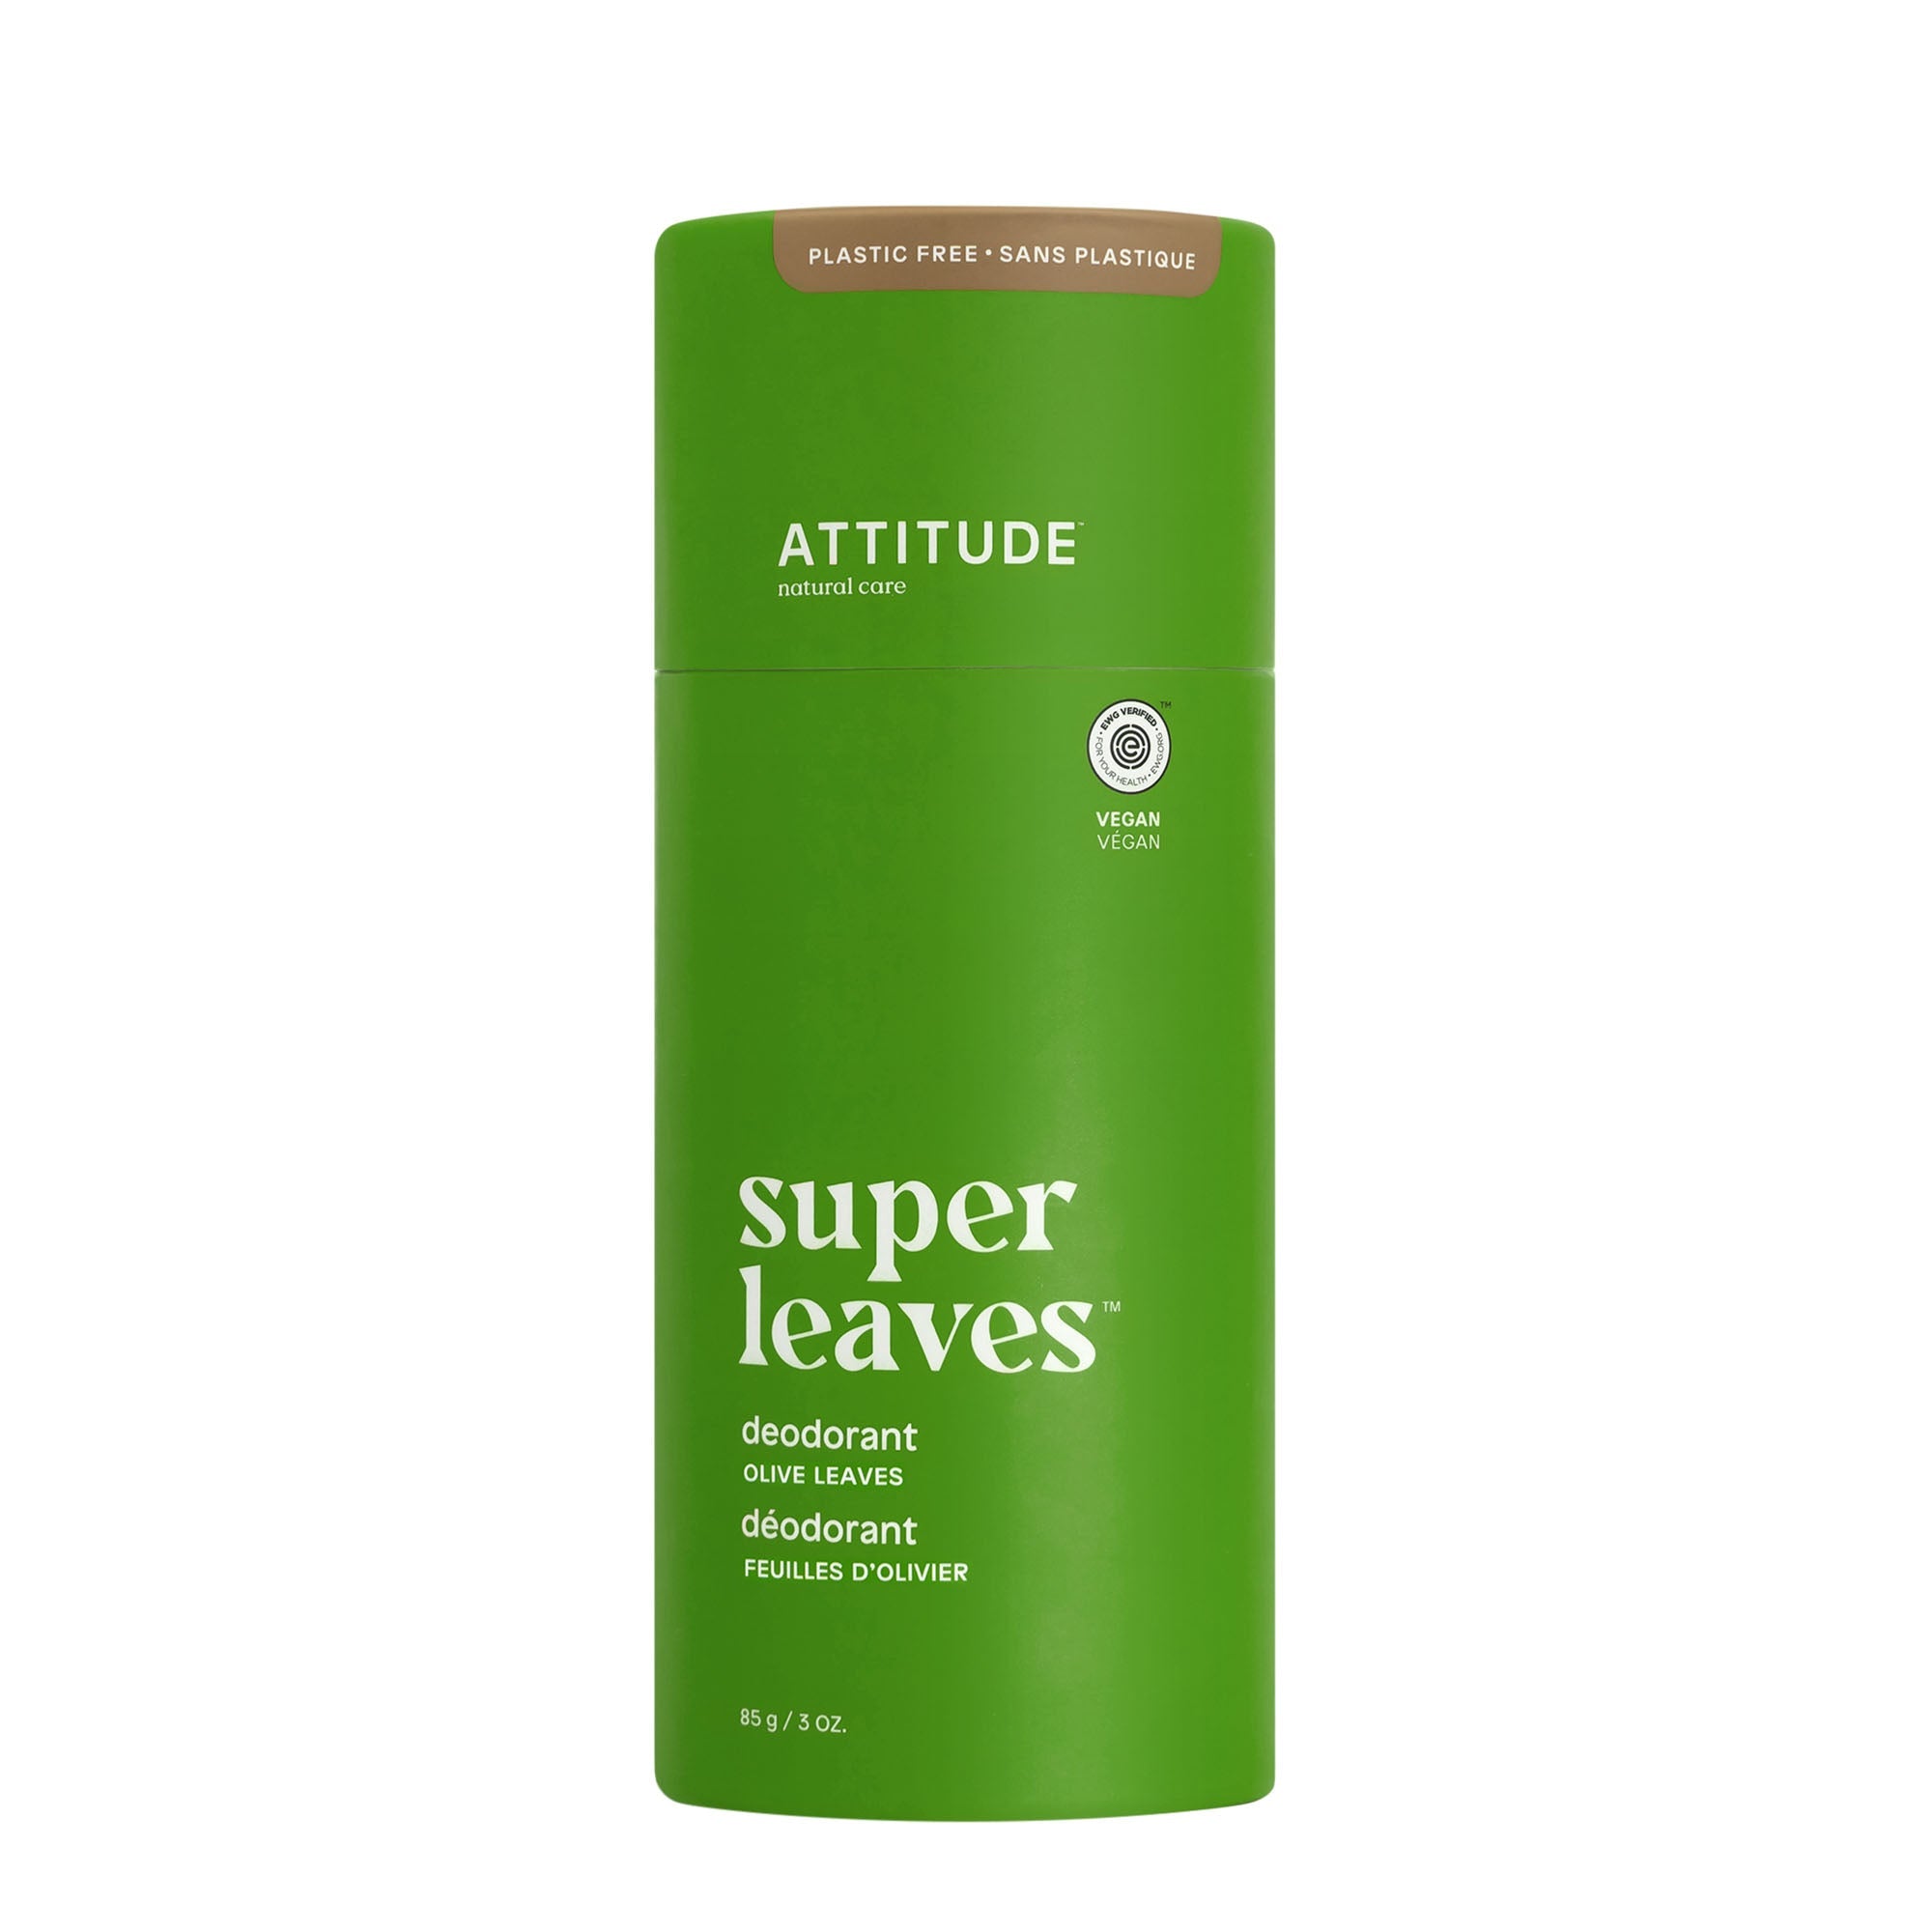 ATTITUDE Super leaves Biodegredable Deodorant 11993_en?_main? Olive Leaves 1 unit